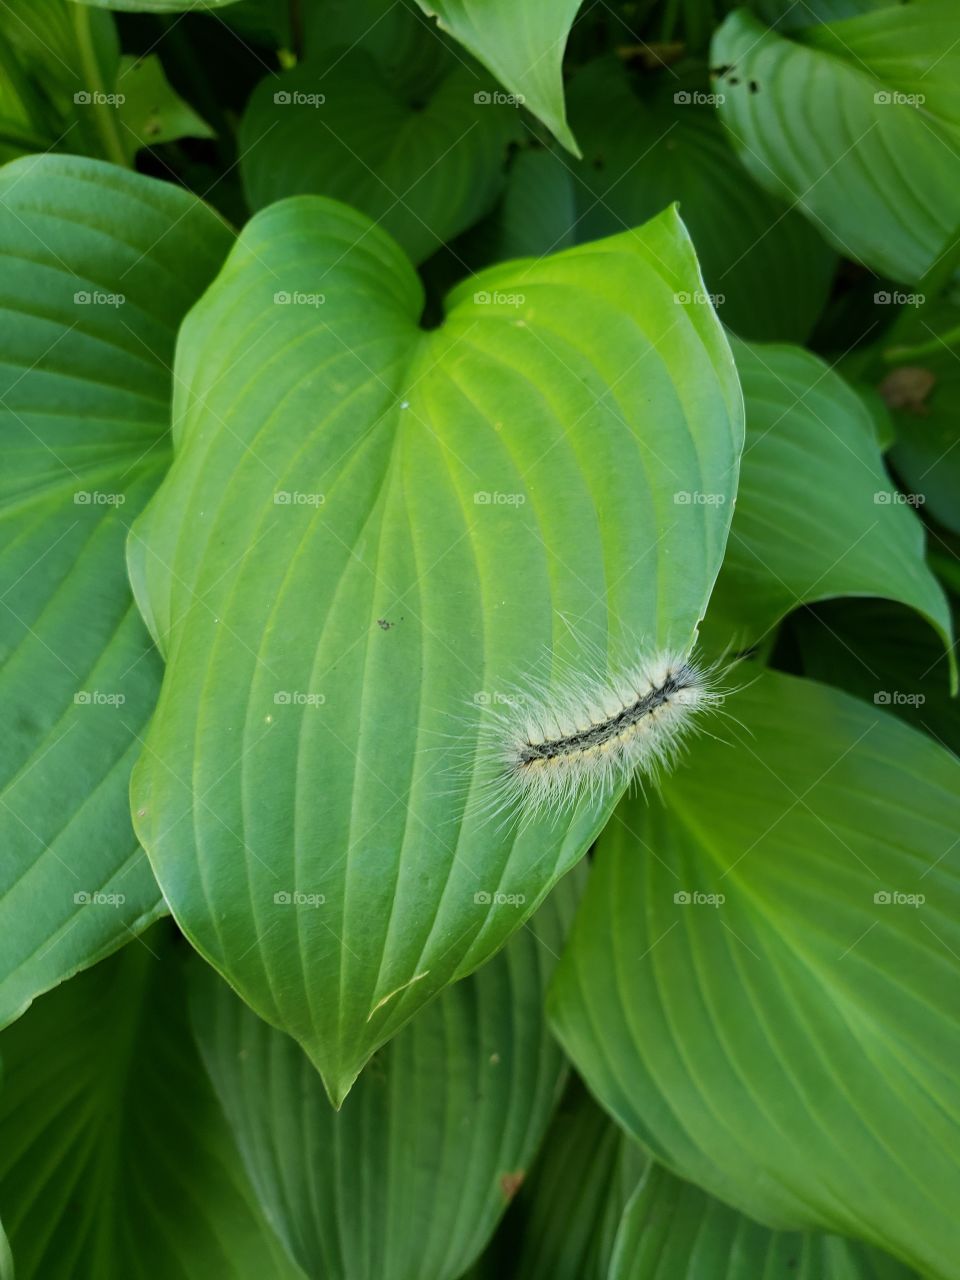 Leaf and caterpillar